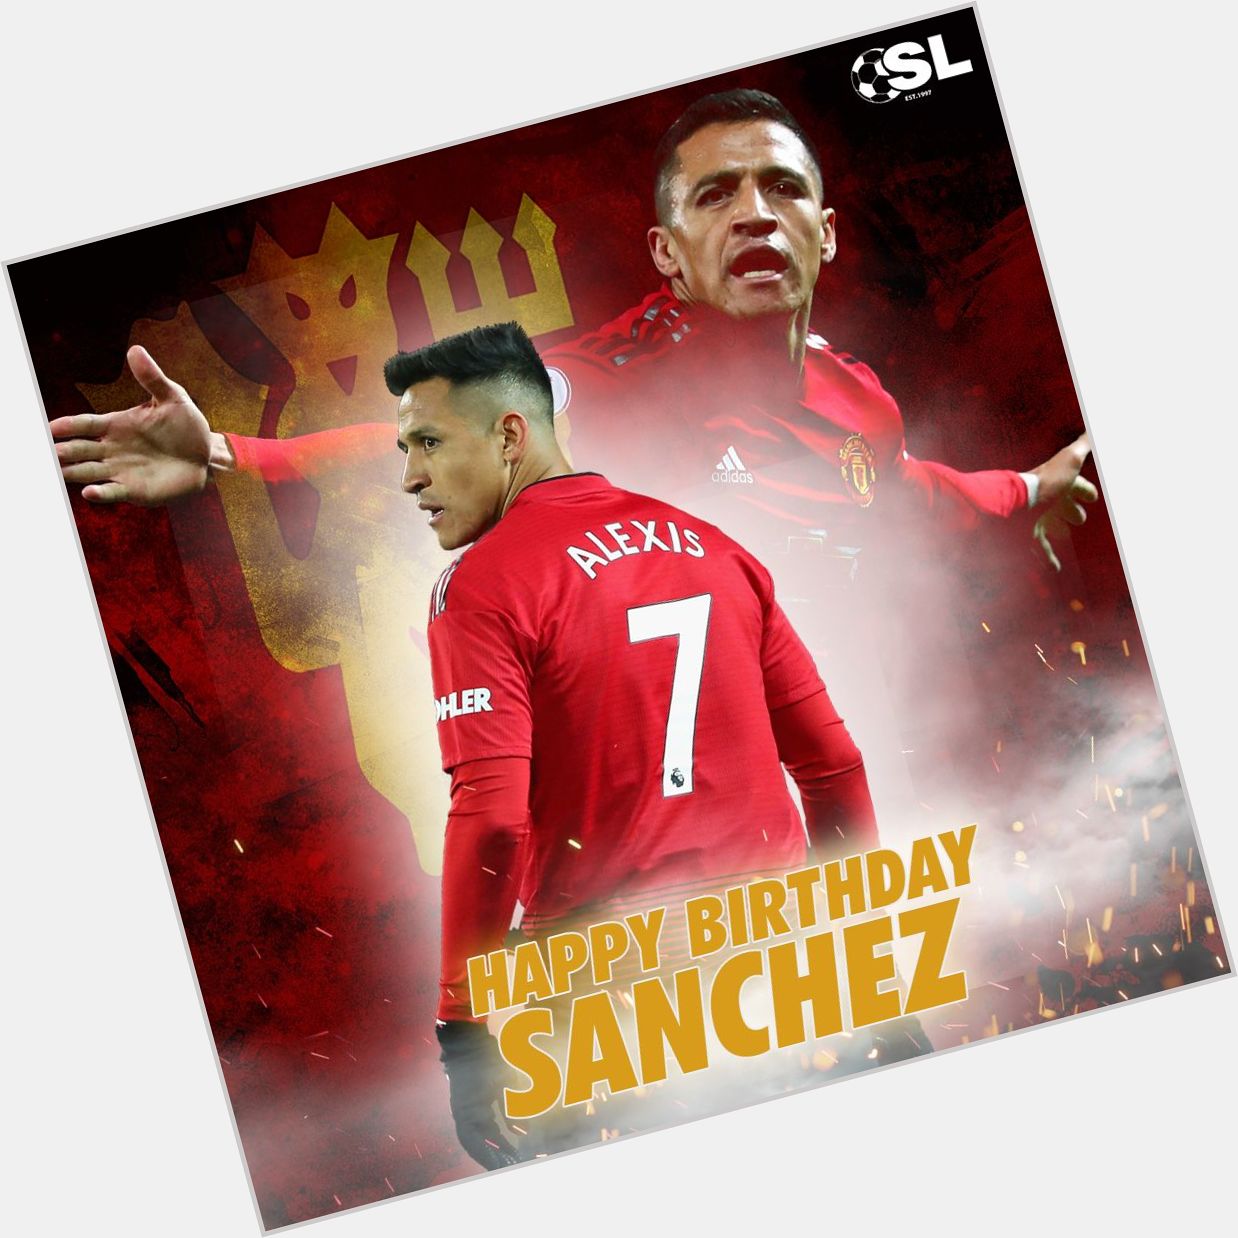  | Happy Birthday to Manchester United forward, Alexis Sánchez! 